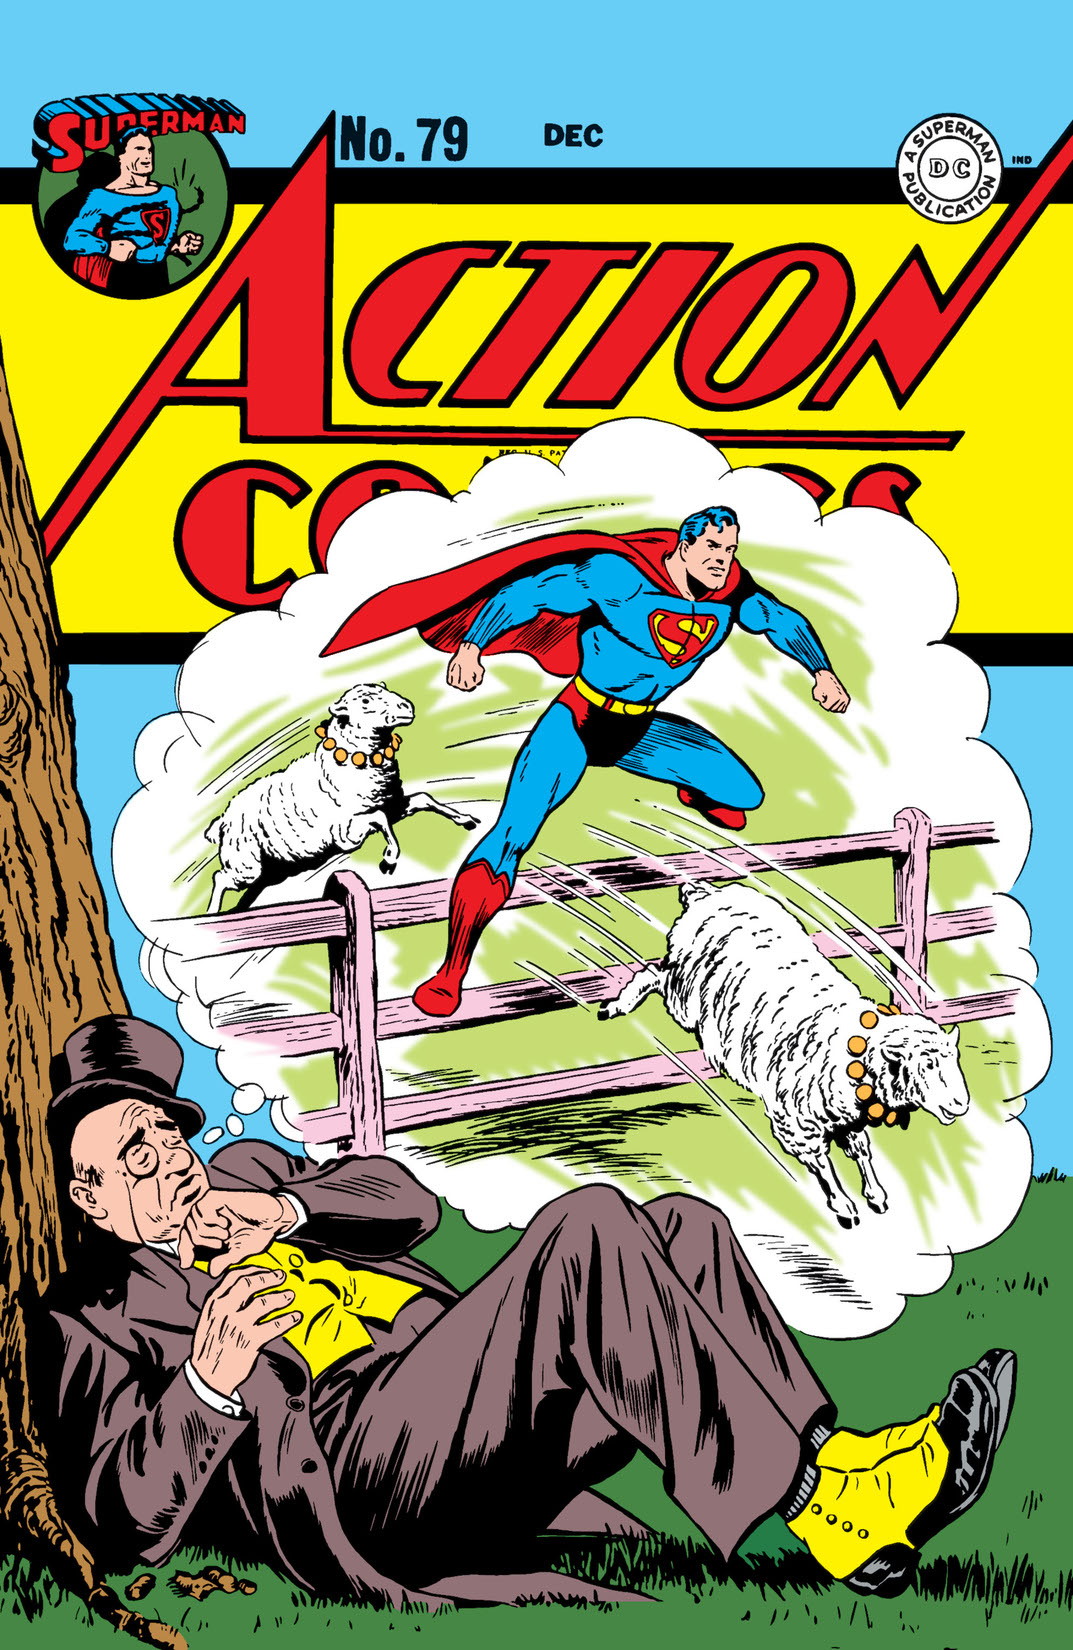 Action Comics (1938-) #79 preview images